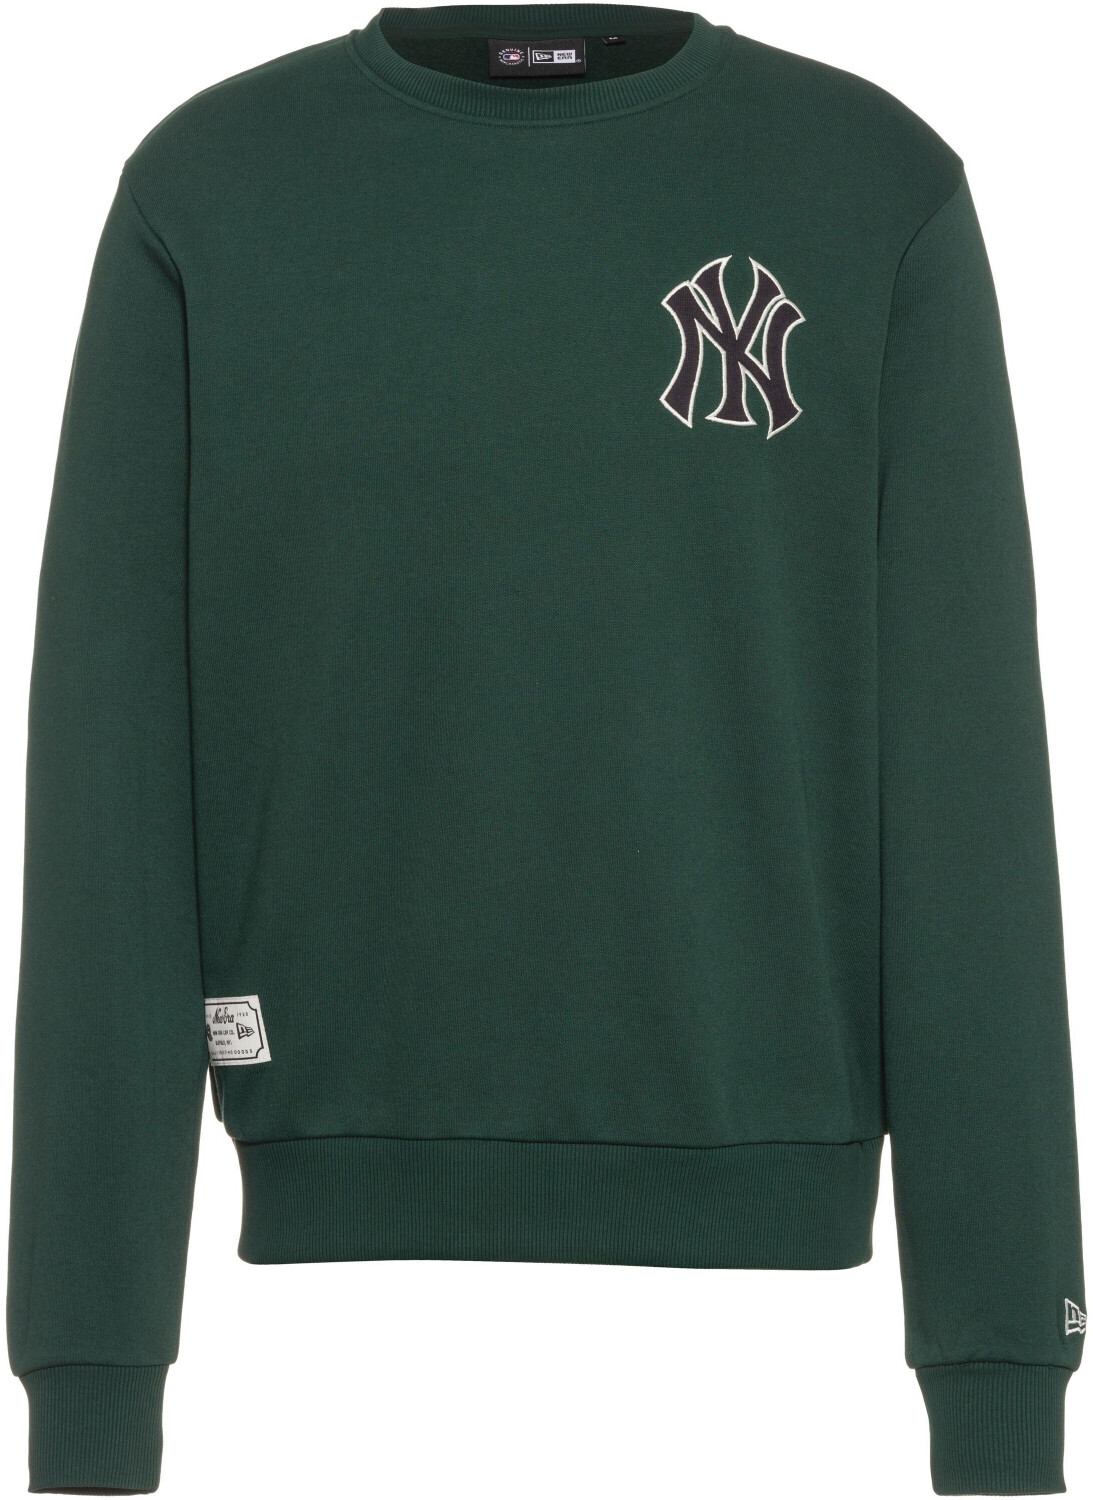 New era MLB New York Yankees Heritage Script Sweatshirt Black